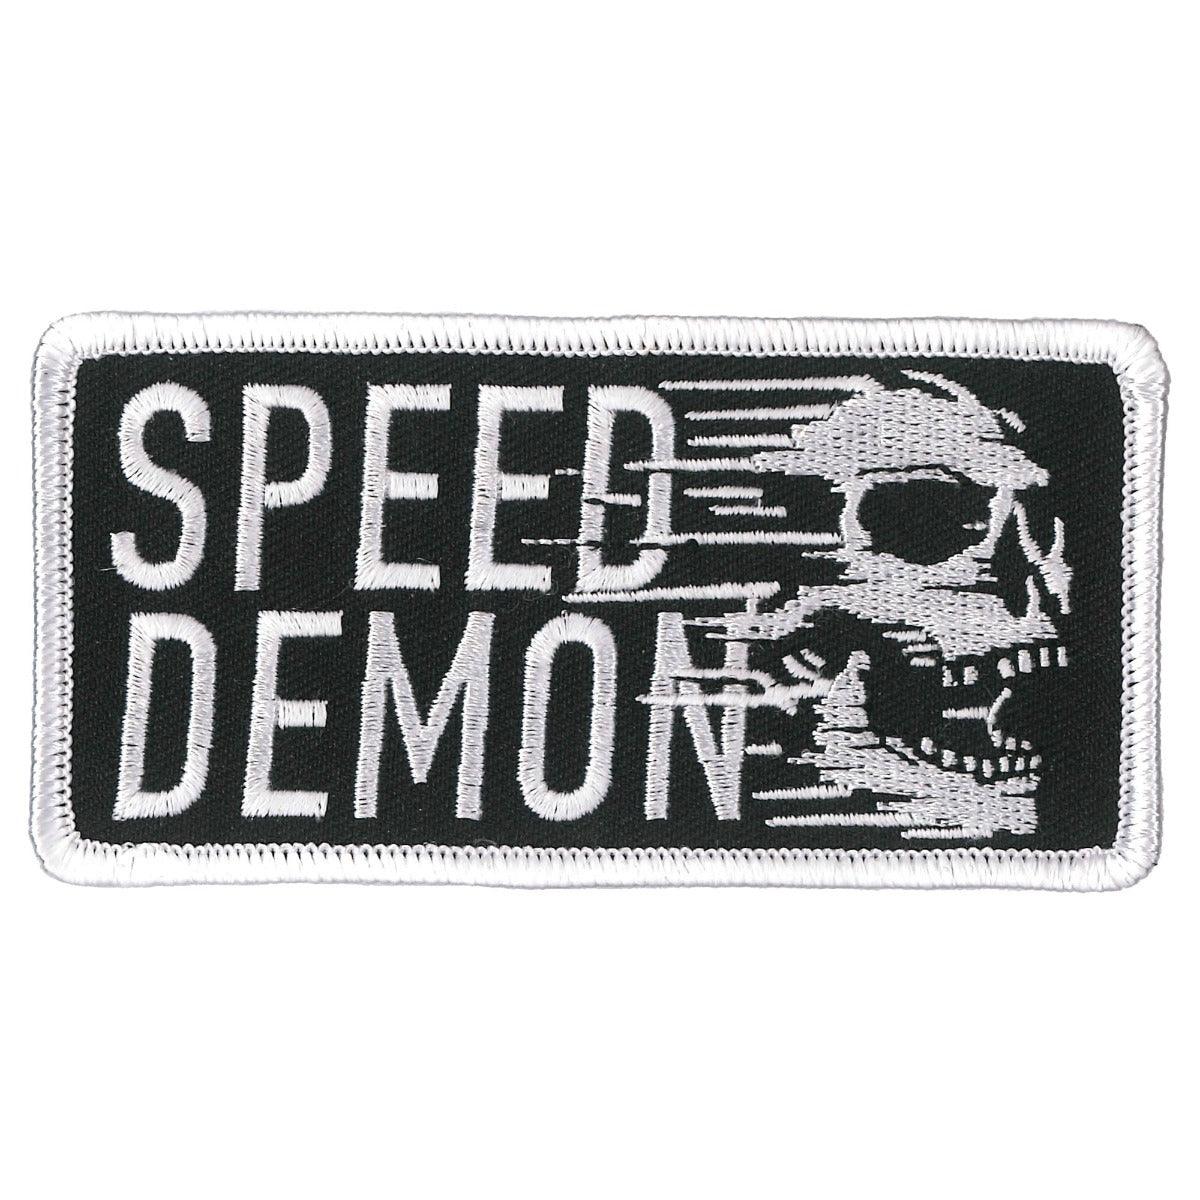 Hot Leathers Speed Demon - American Legend Rider